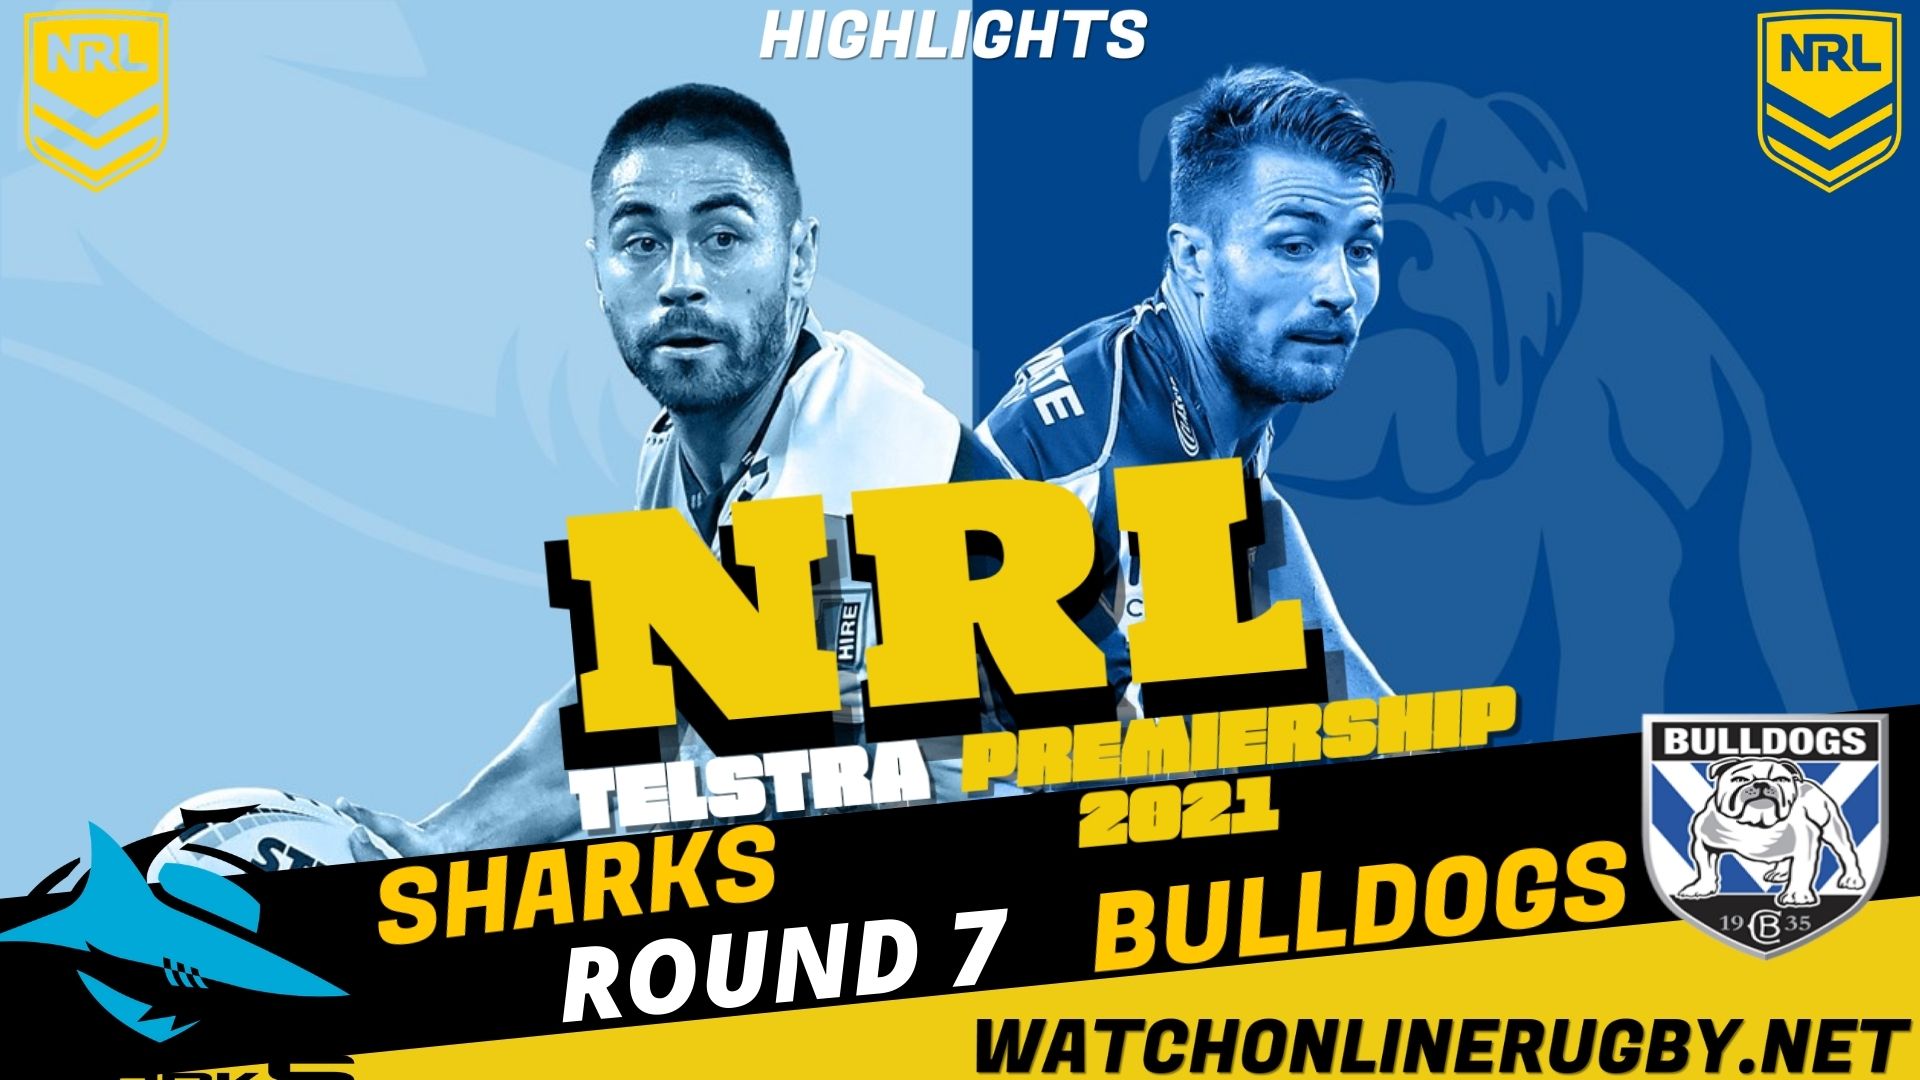 Sharks Vs Bulldogs Highlights RD 7 NRL Rugby